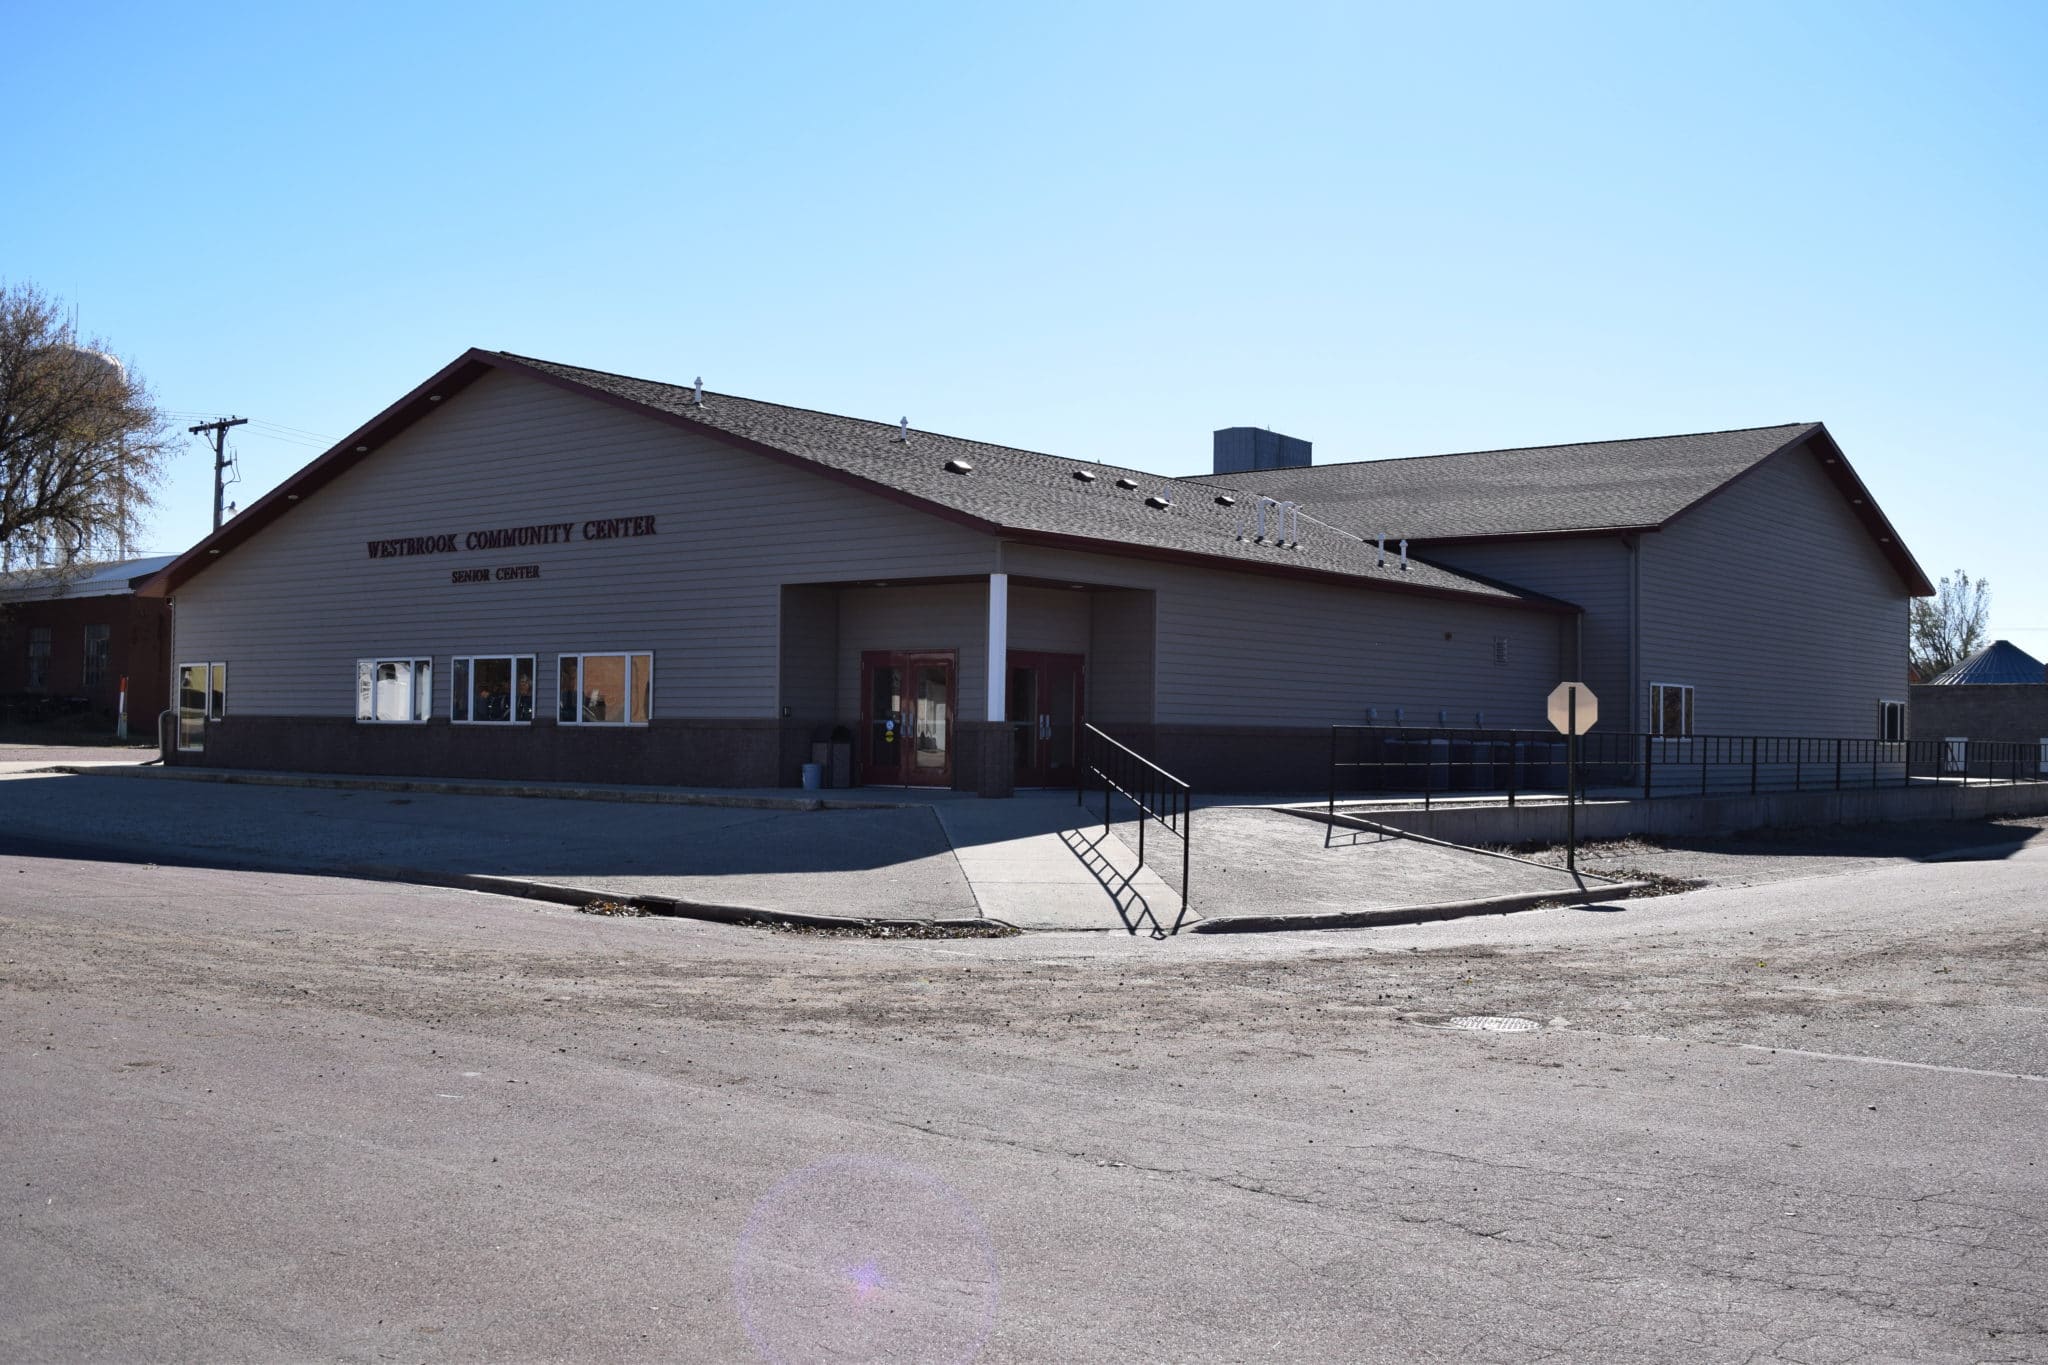 Westbrook Community Center and Senior Center